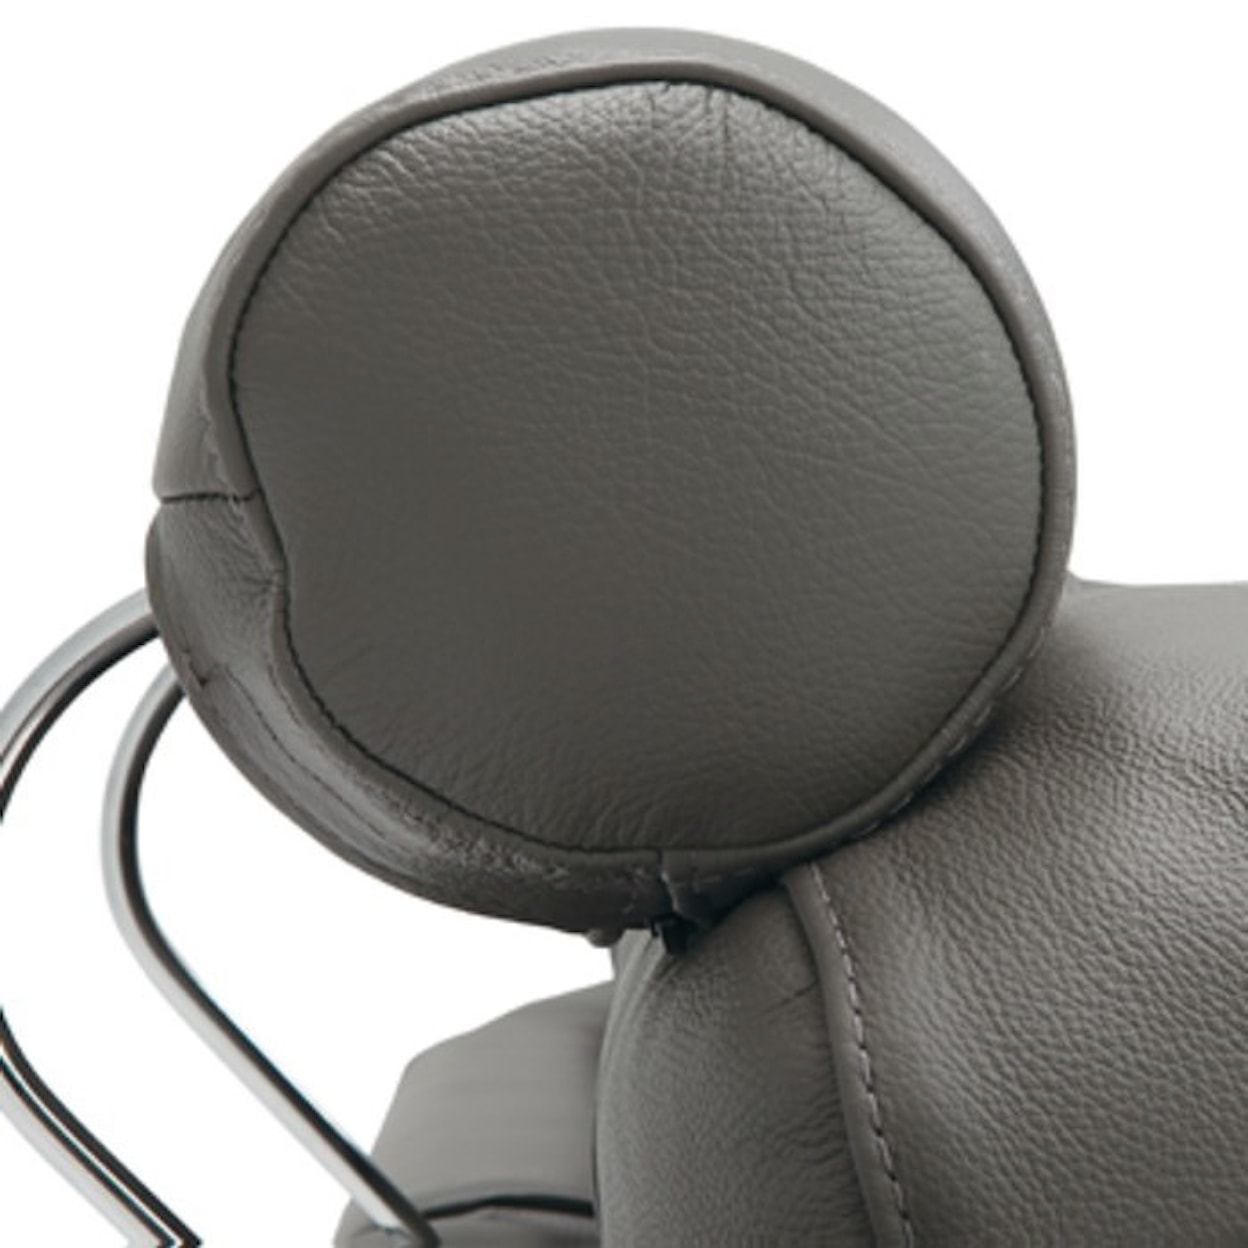 Palliser Flex 3-Seat Reclining Sectional Sofa w/ LAF Chais